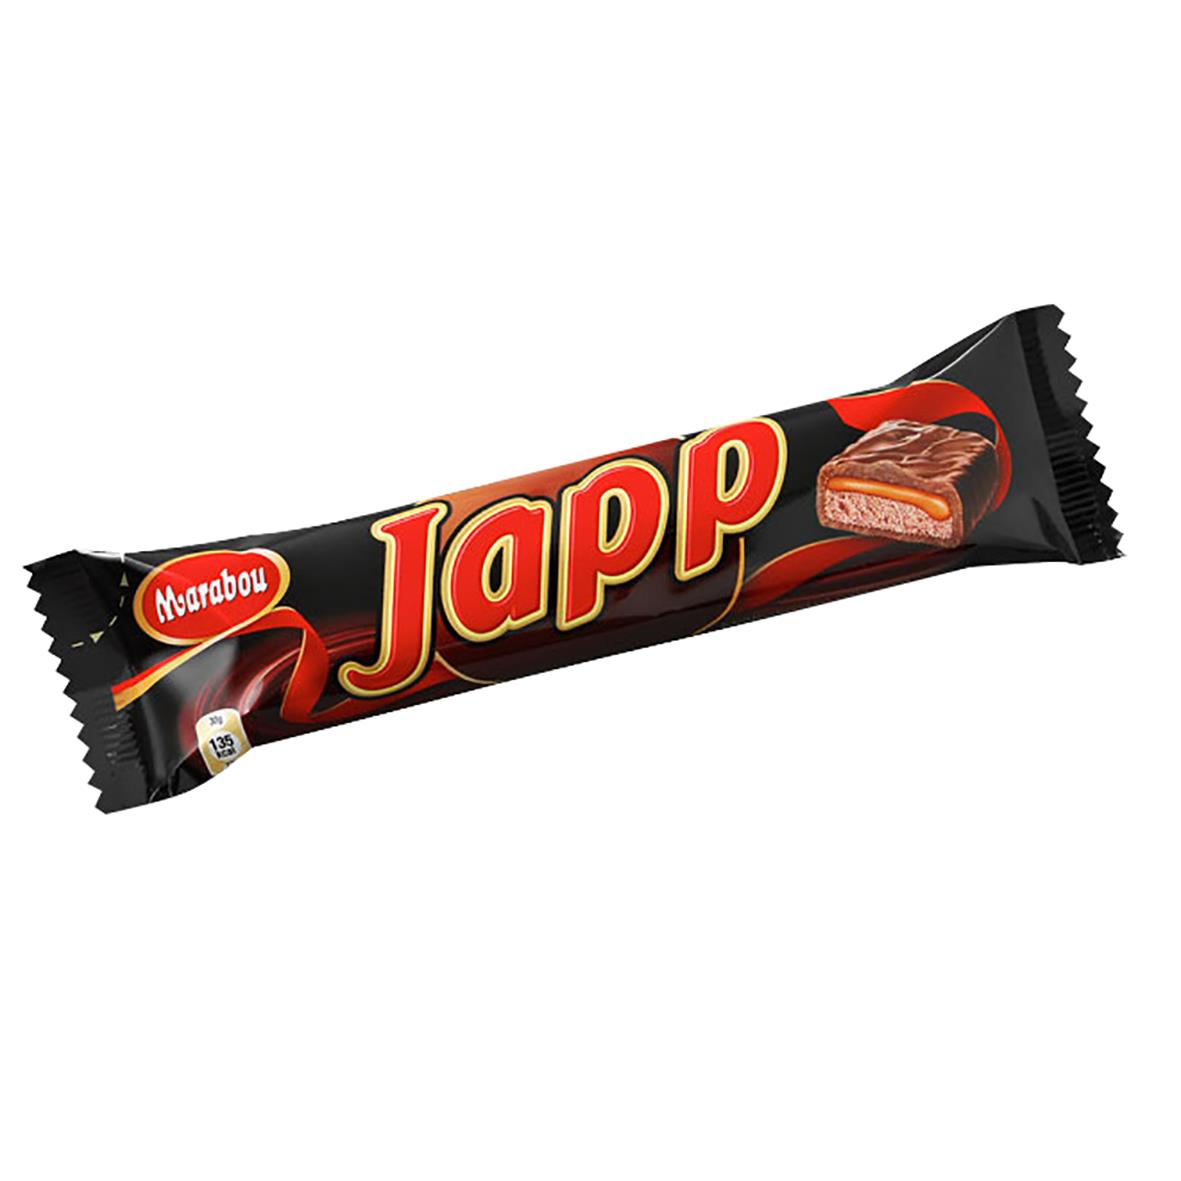 Choklad Marabou Japp Dubbel 60g 60010737